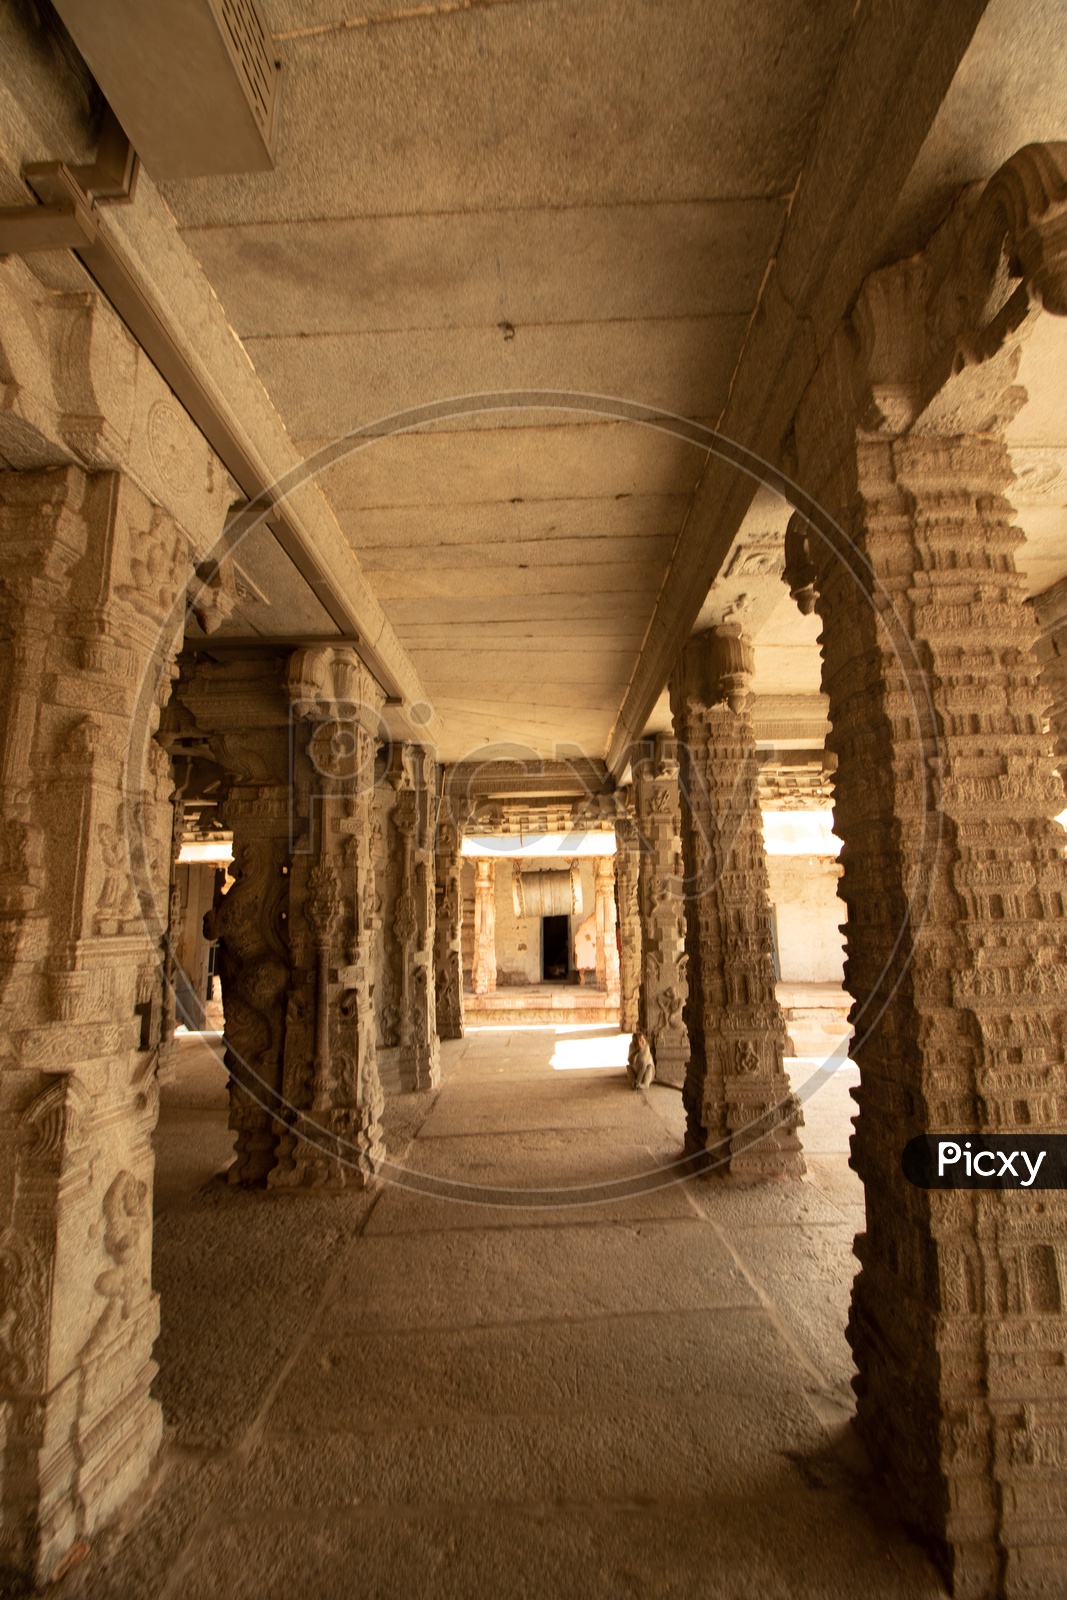 row pillars in virupaksha temple.